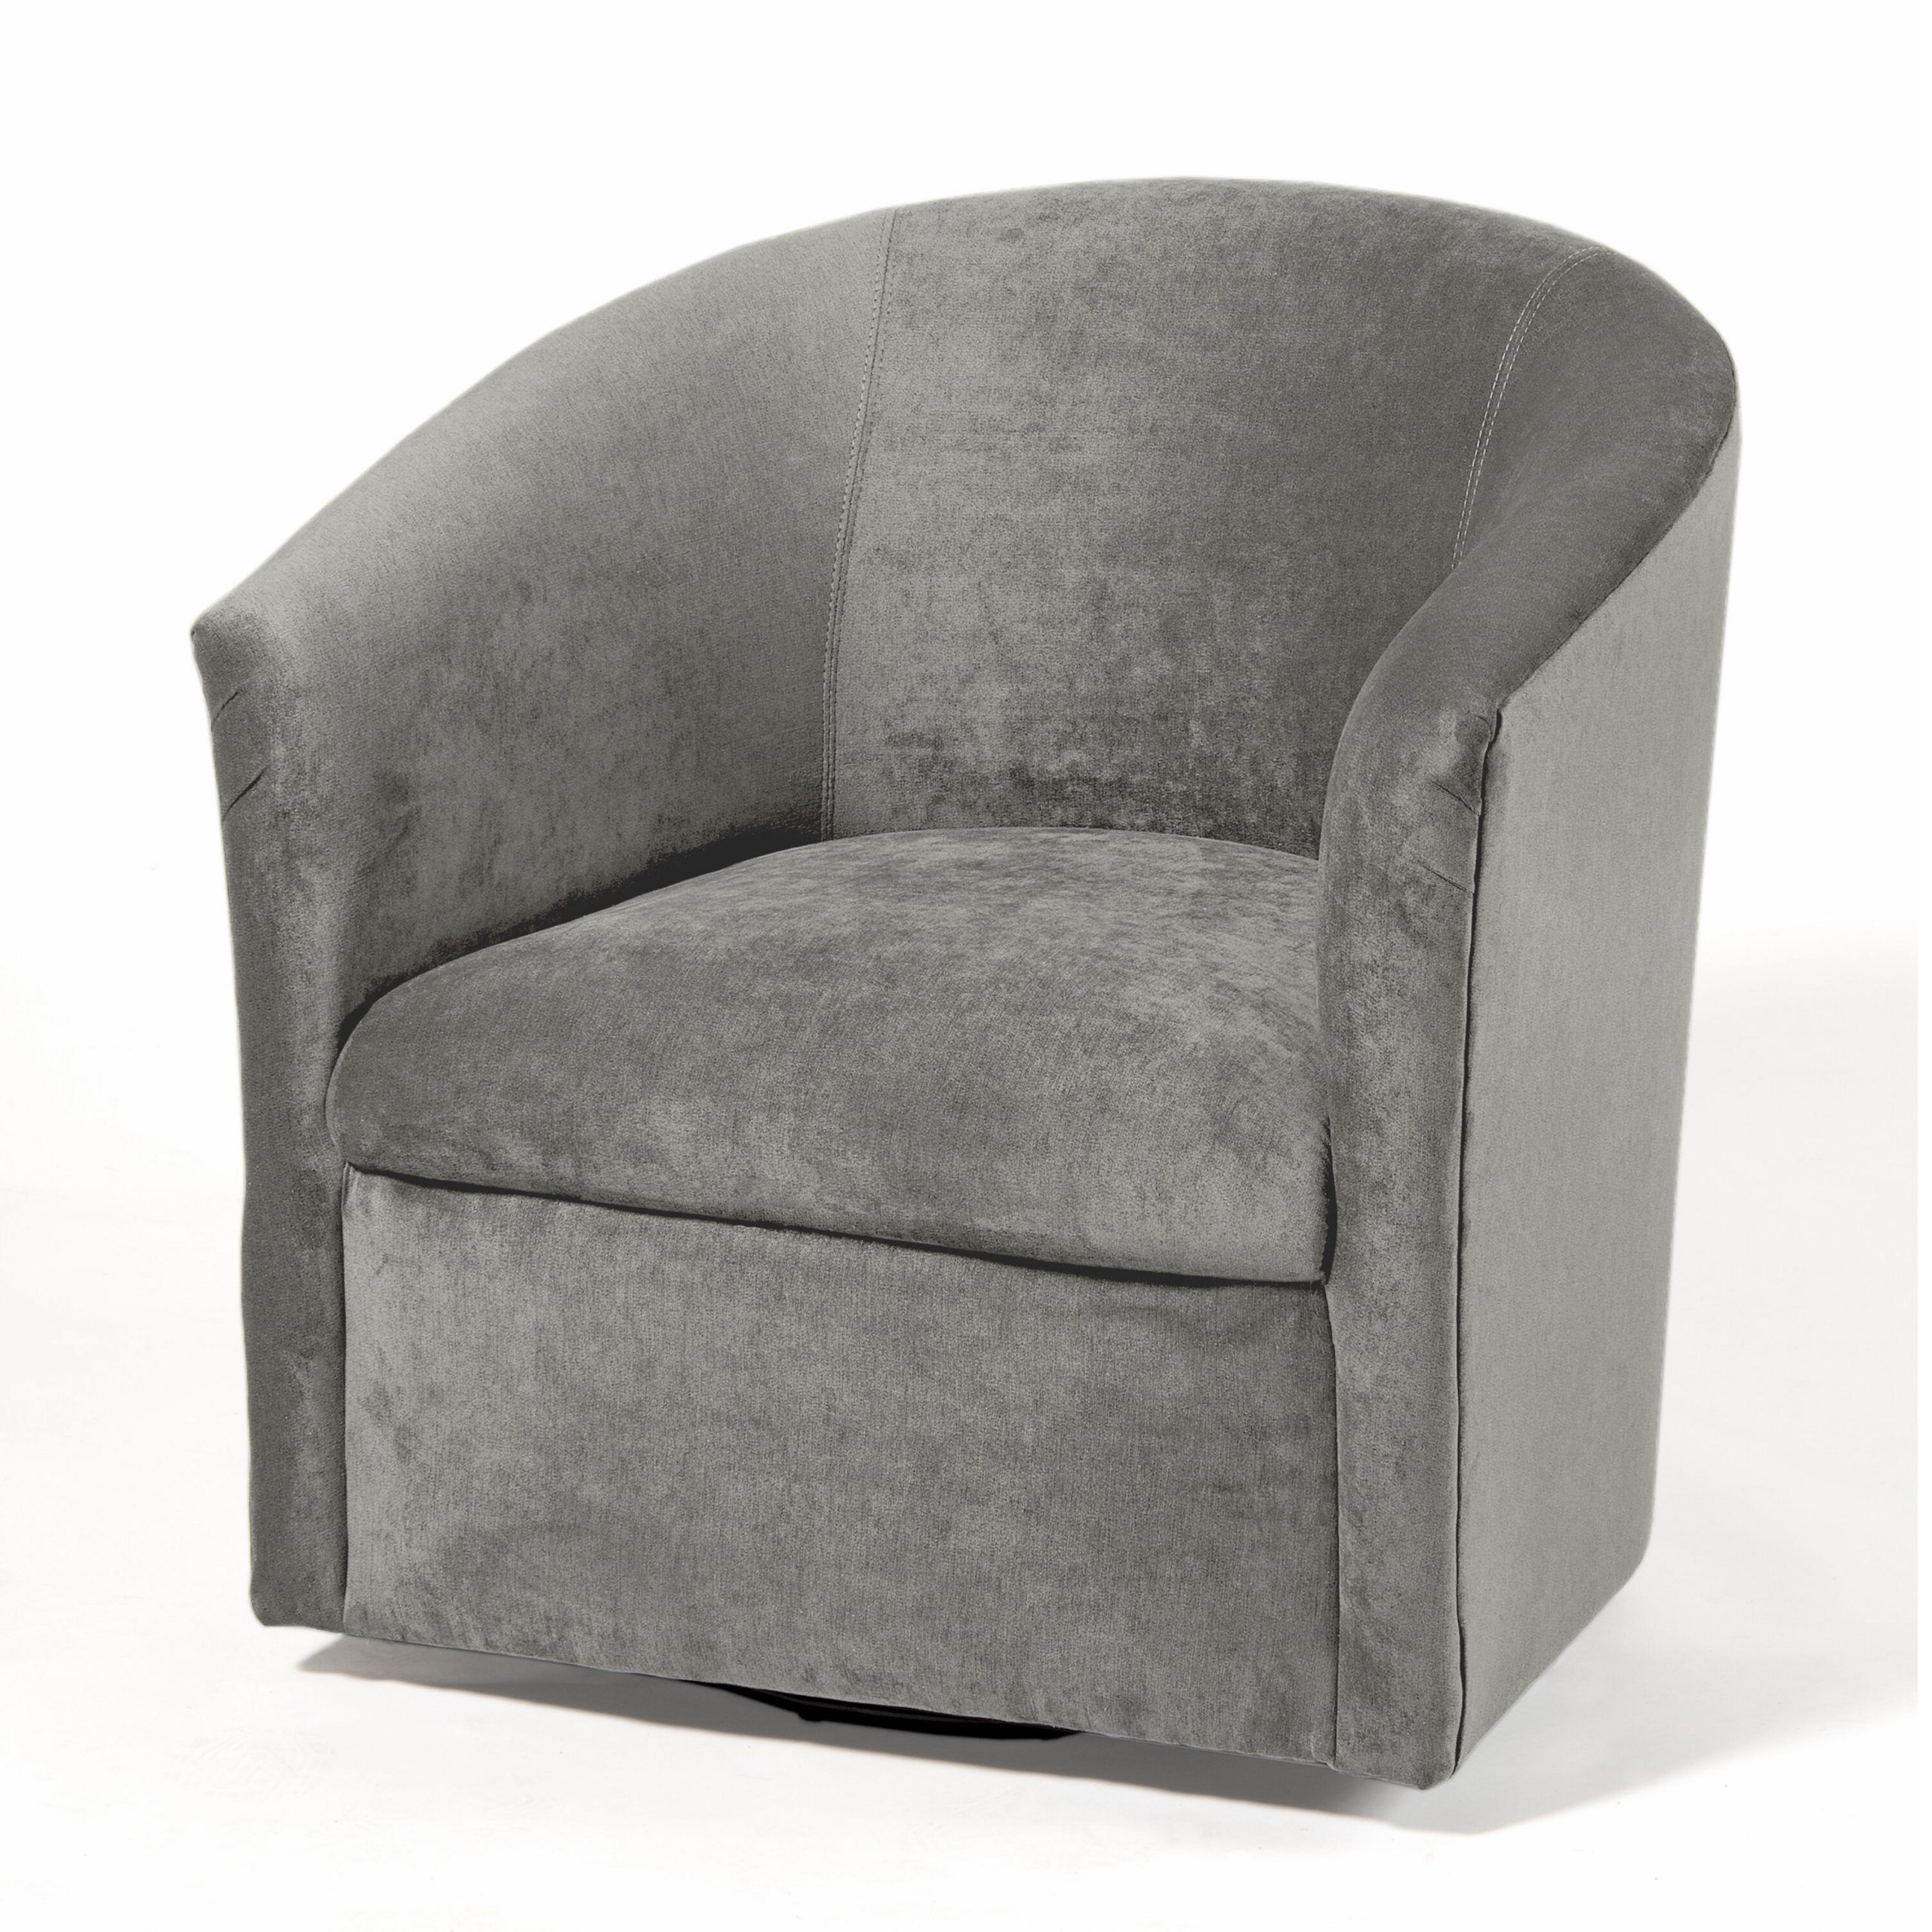 Swivel Chairs | Wayfair With Regard To Loftus Swivel Armchairs (View 15 of 15)